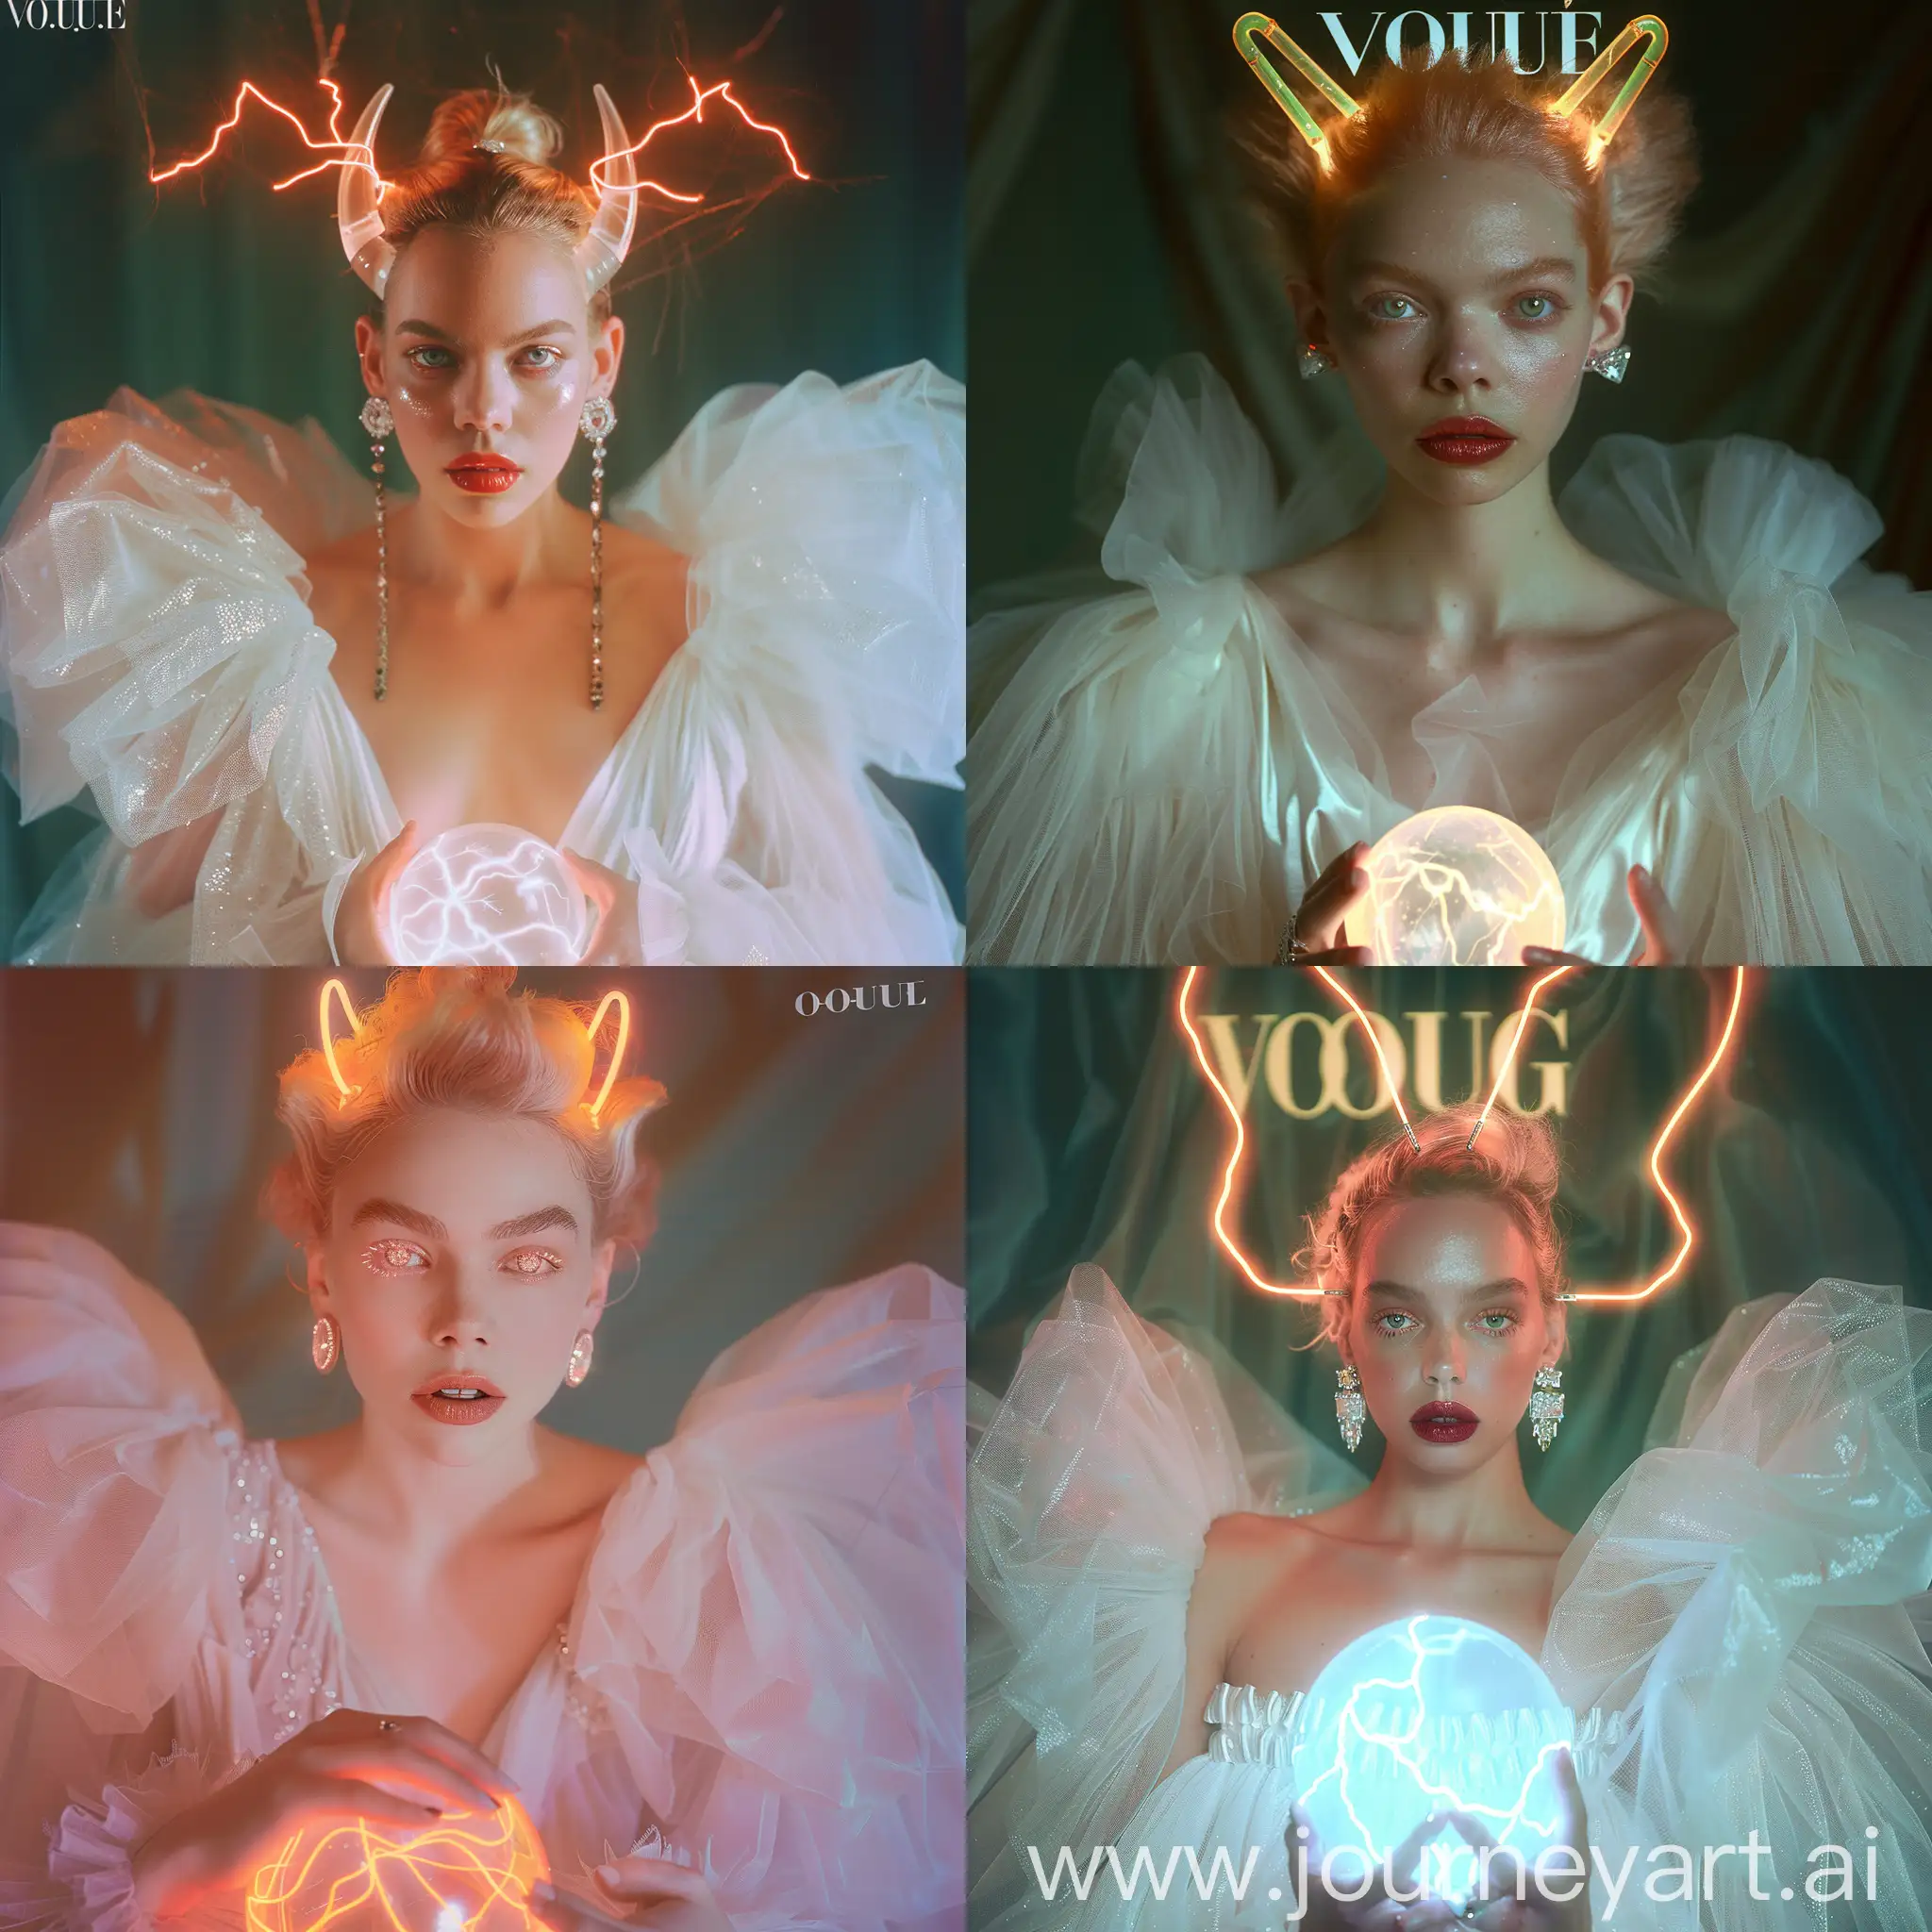 Vogue-Cover-Anya-TaylorJoy-and-Madonna-Embrace-Vampire-Aesthetics-in-Neonlit-Dark-Room